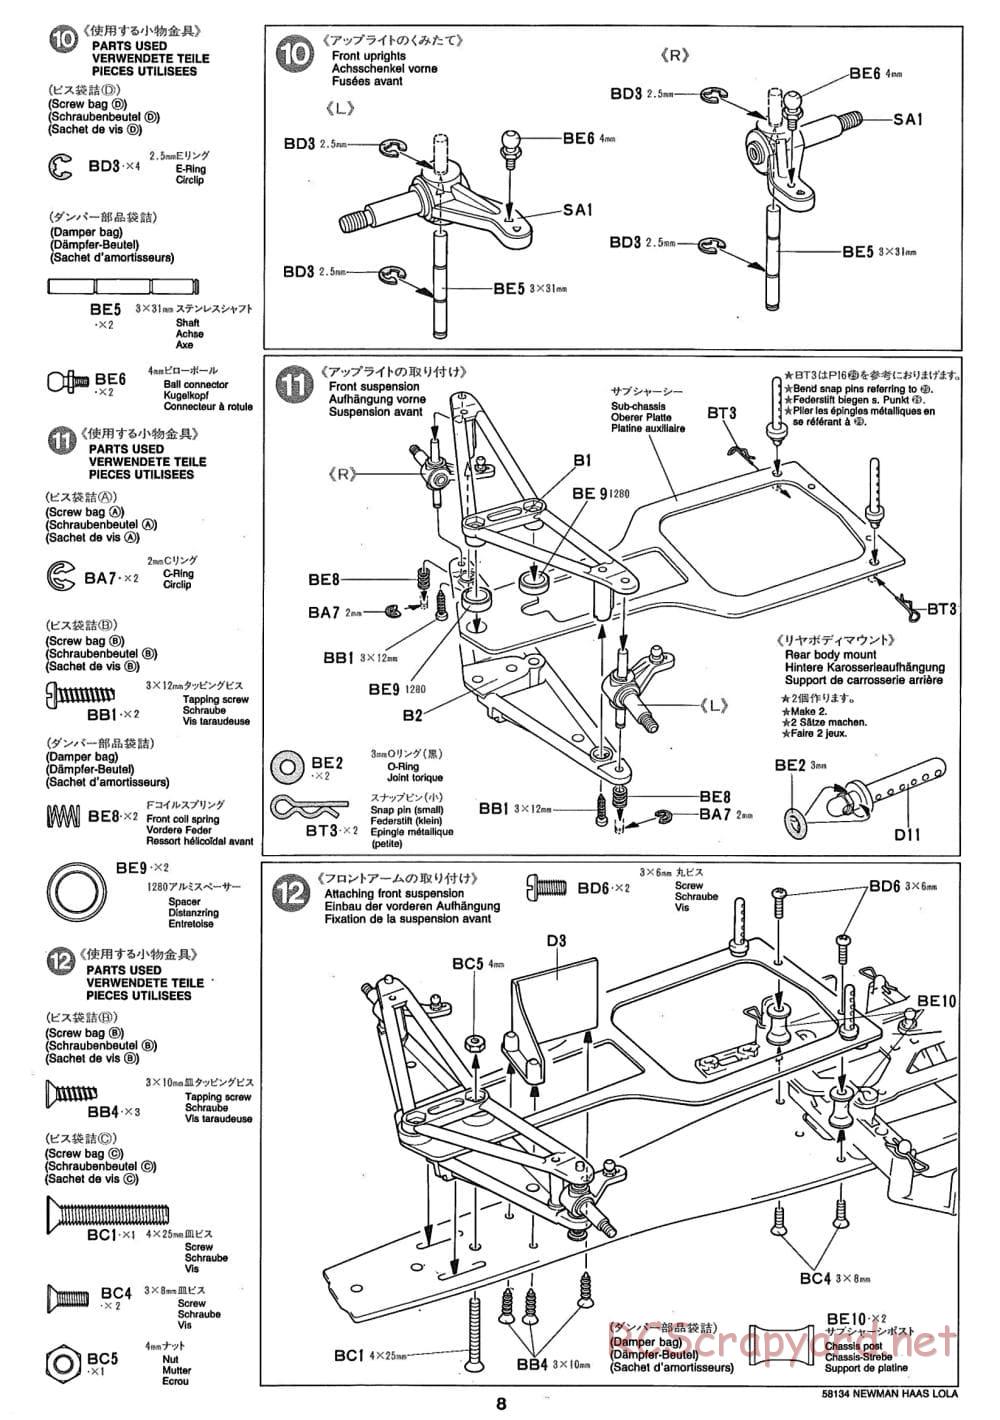 Tamiya - Newman Haas K-Mart Texaco Lola T93/00 Ford - F103L Chassis - Manual - Page 8